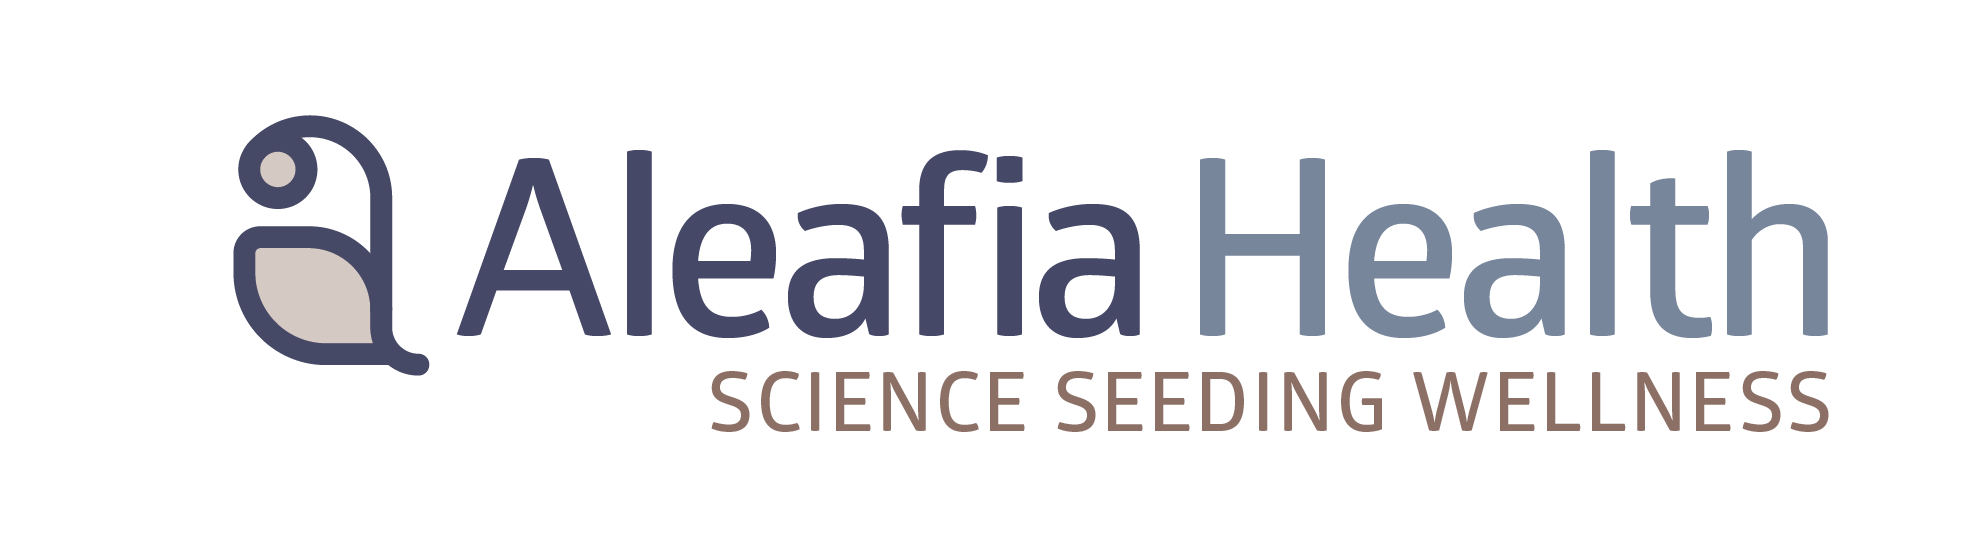 Aleafia Health - Science Seeding Wellness